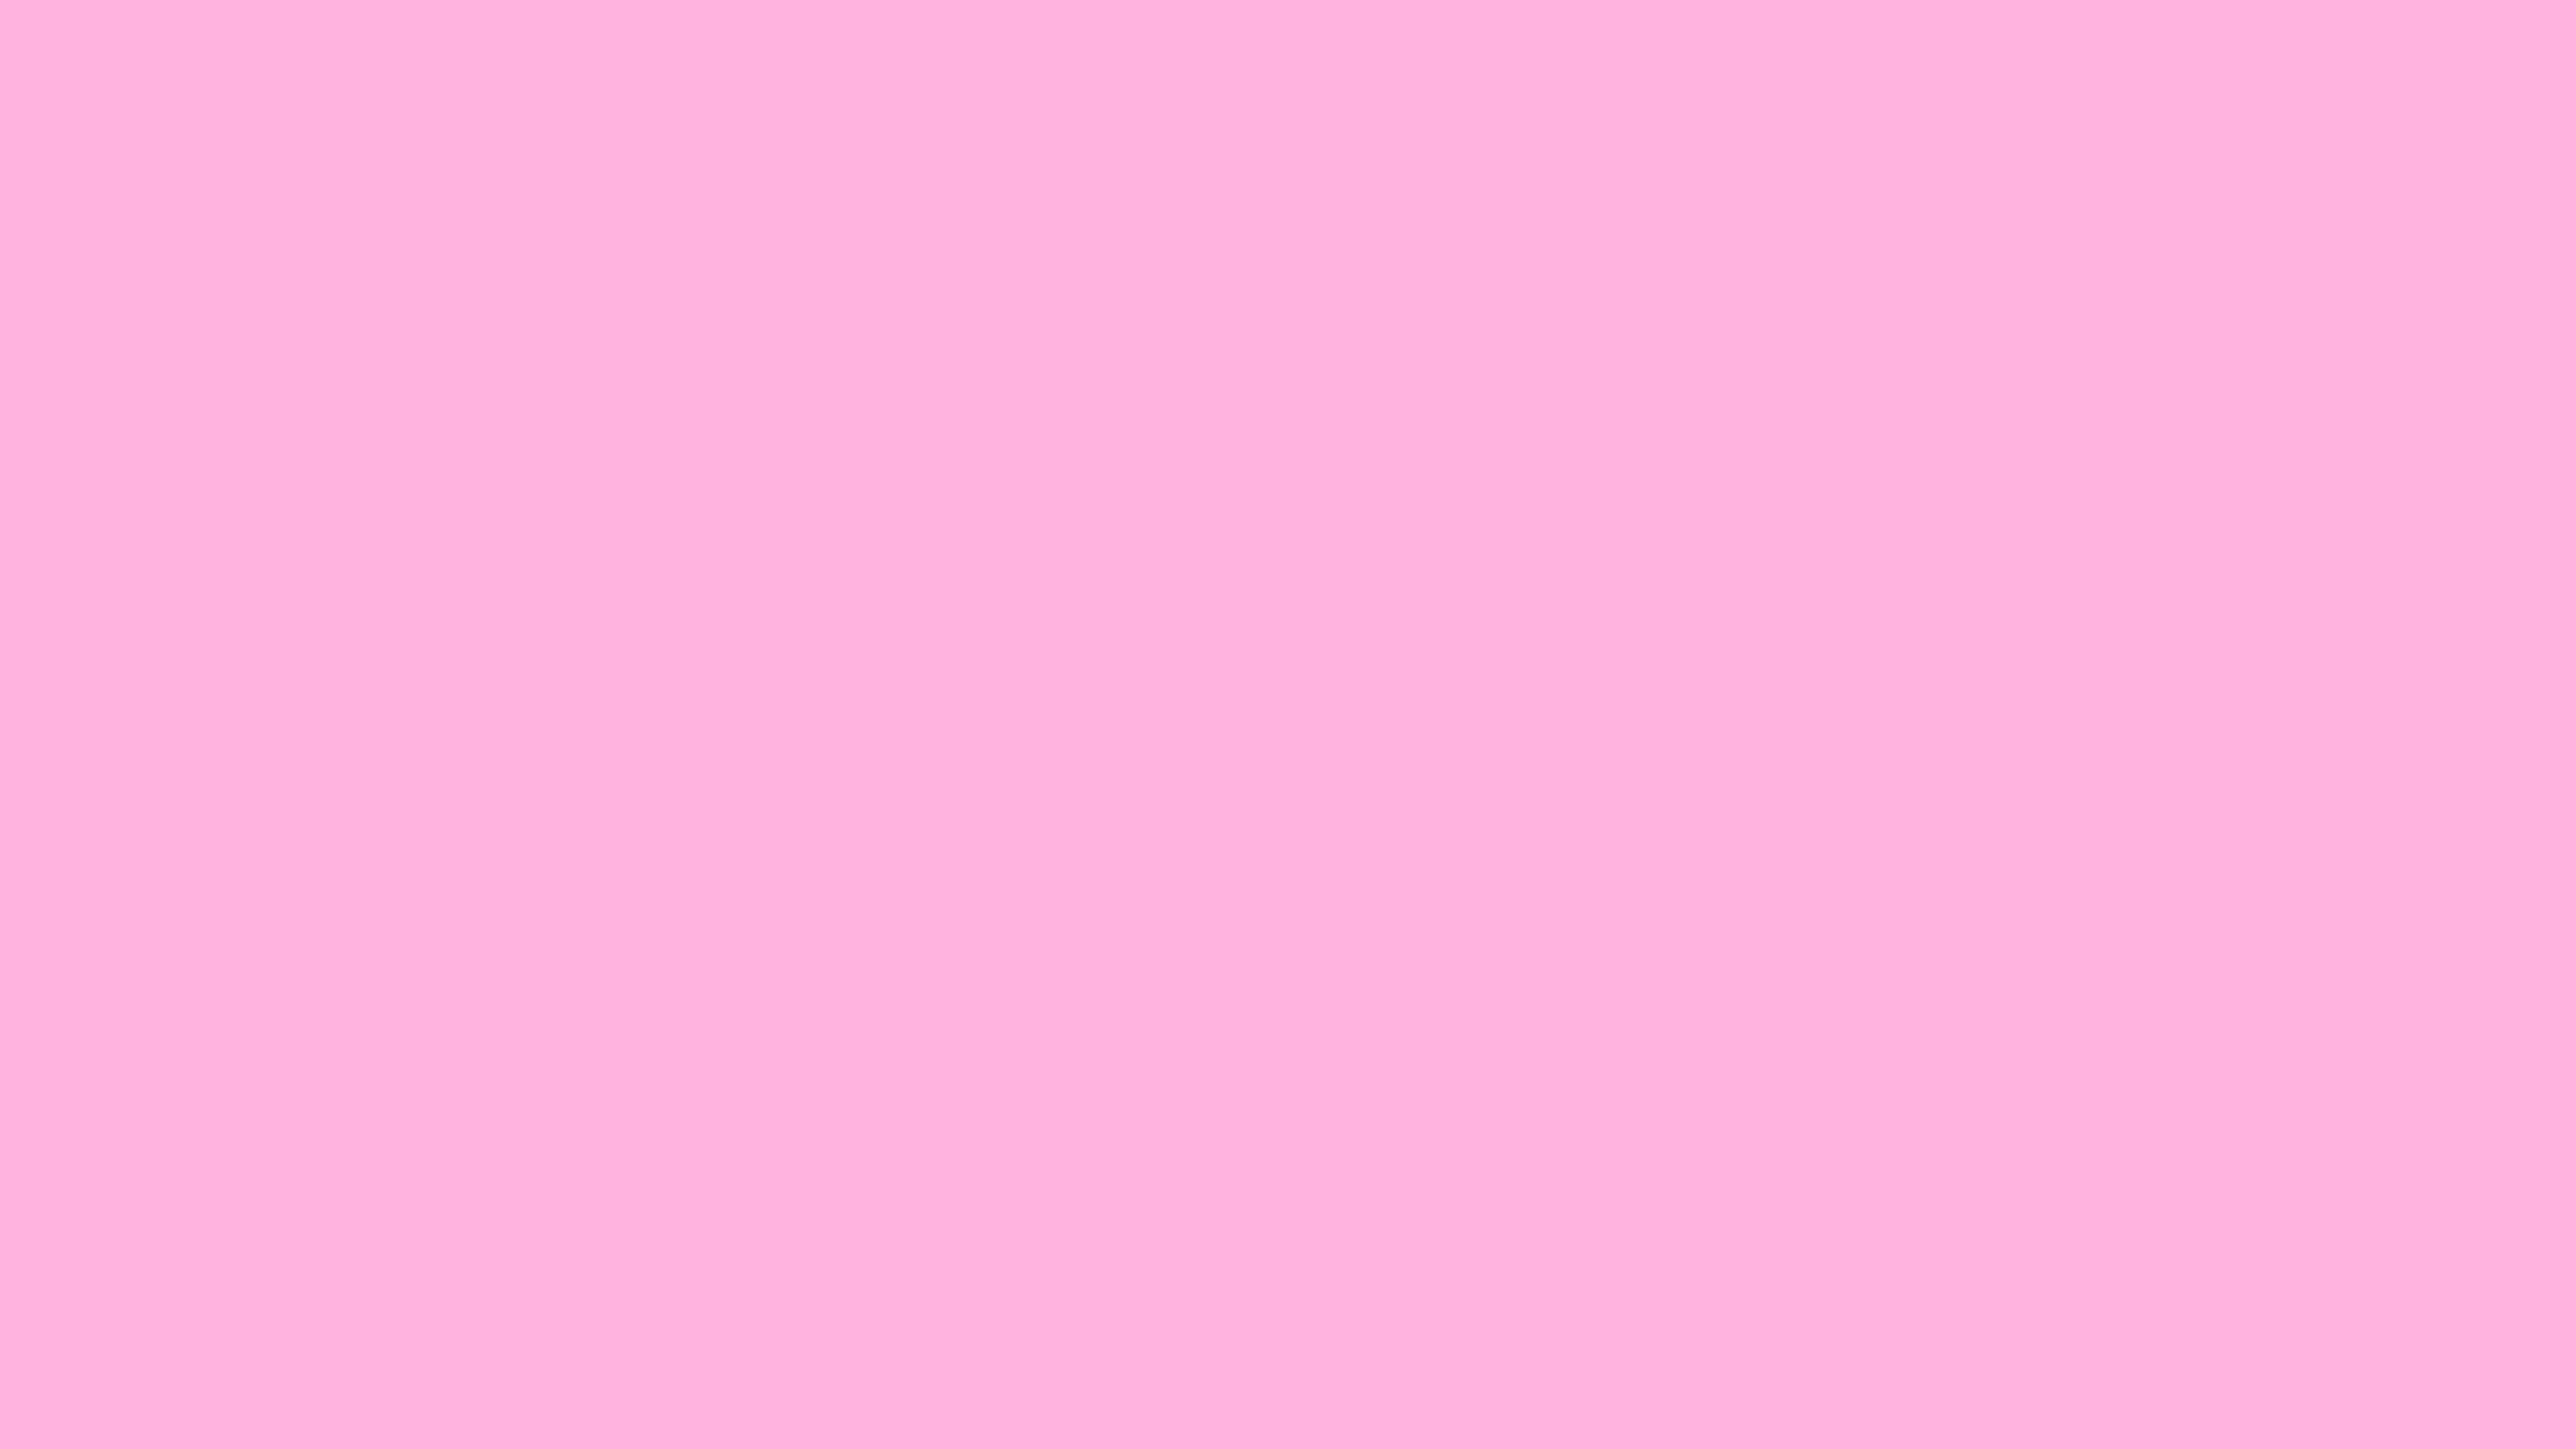 Light Hot Pink Solid Color Background Image Free Image Generator